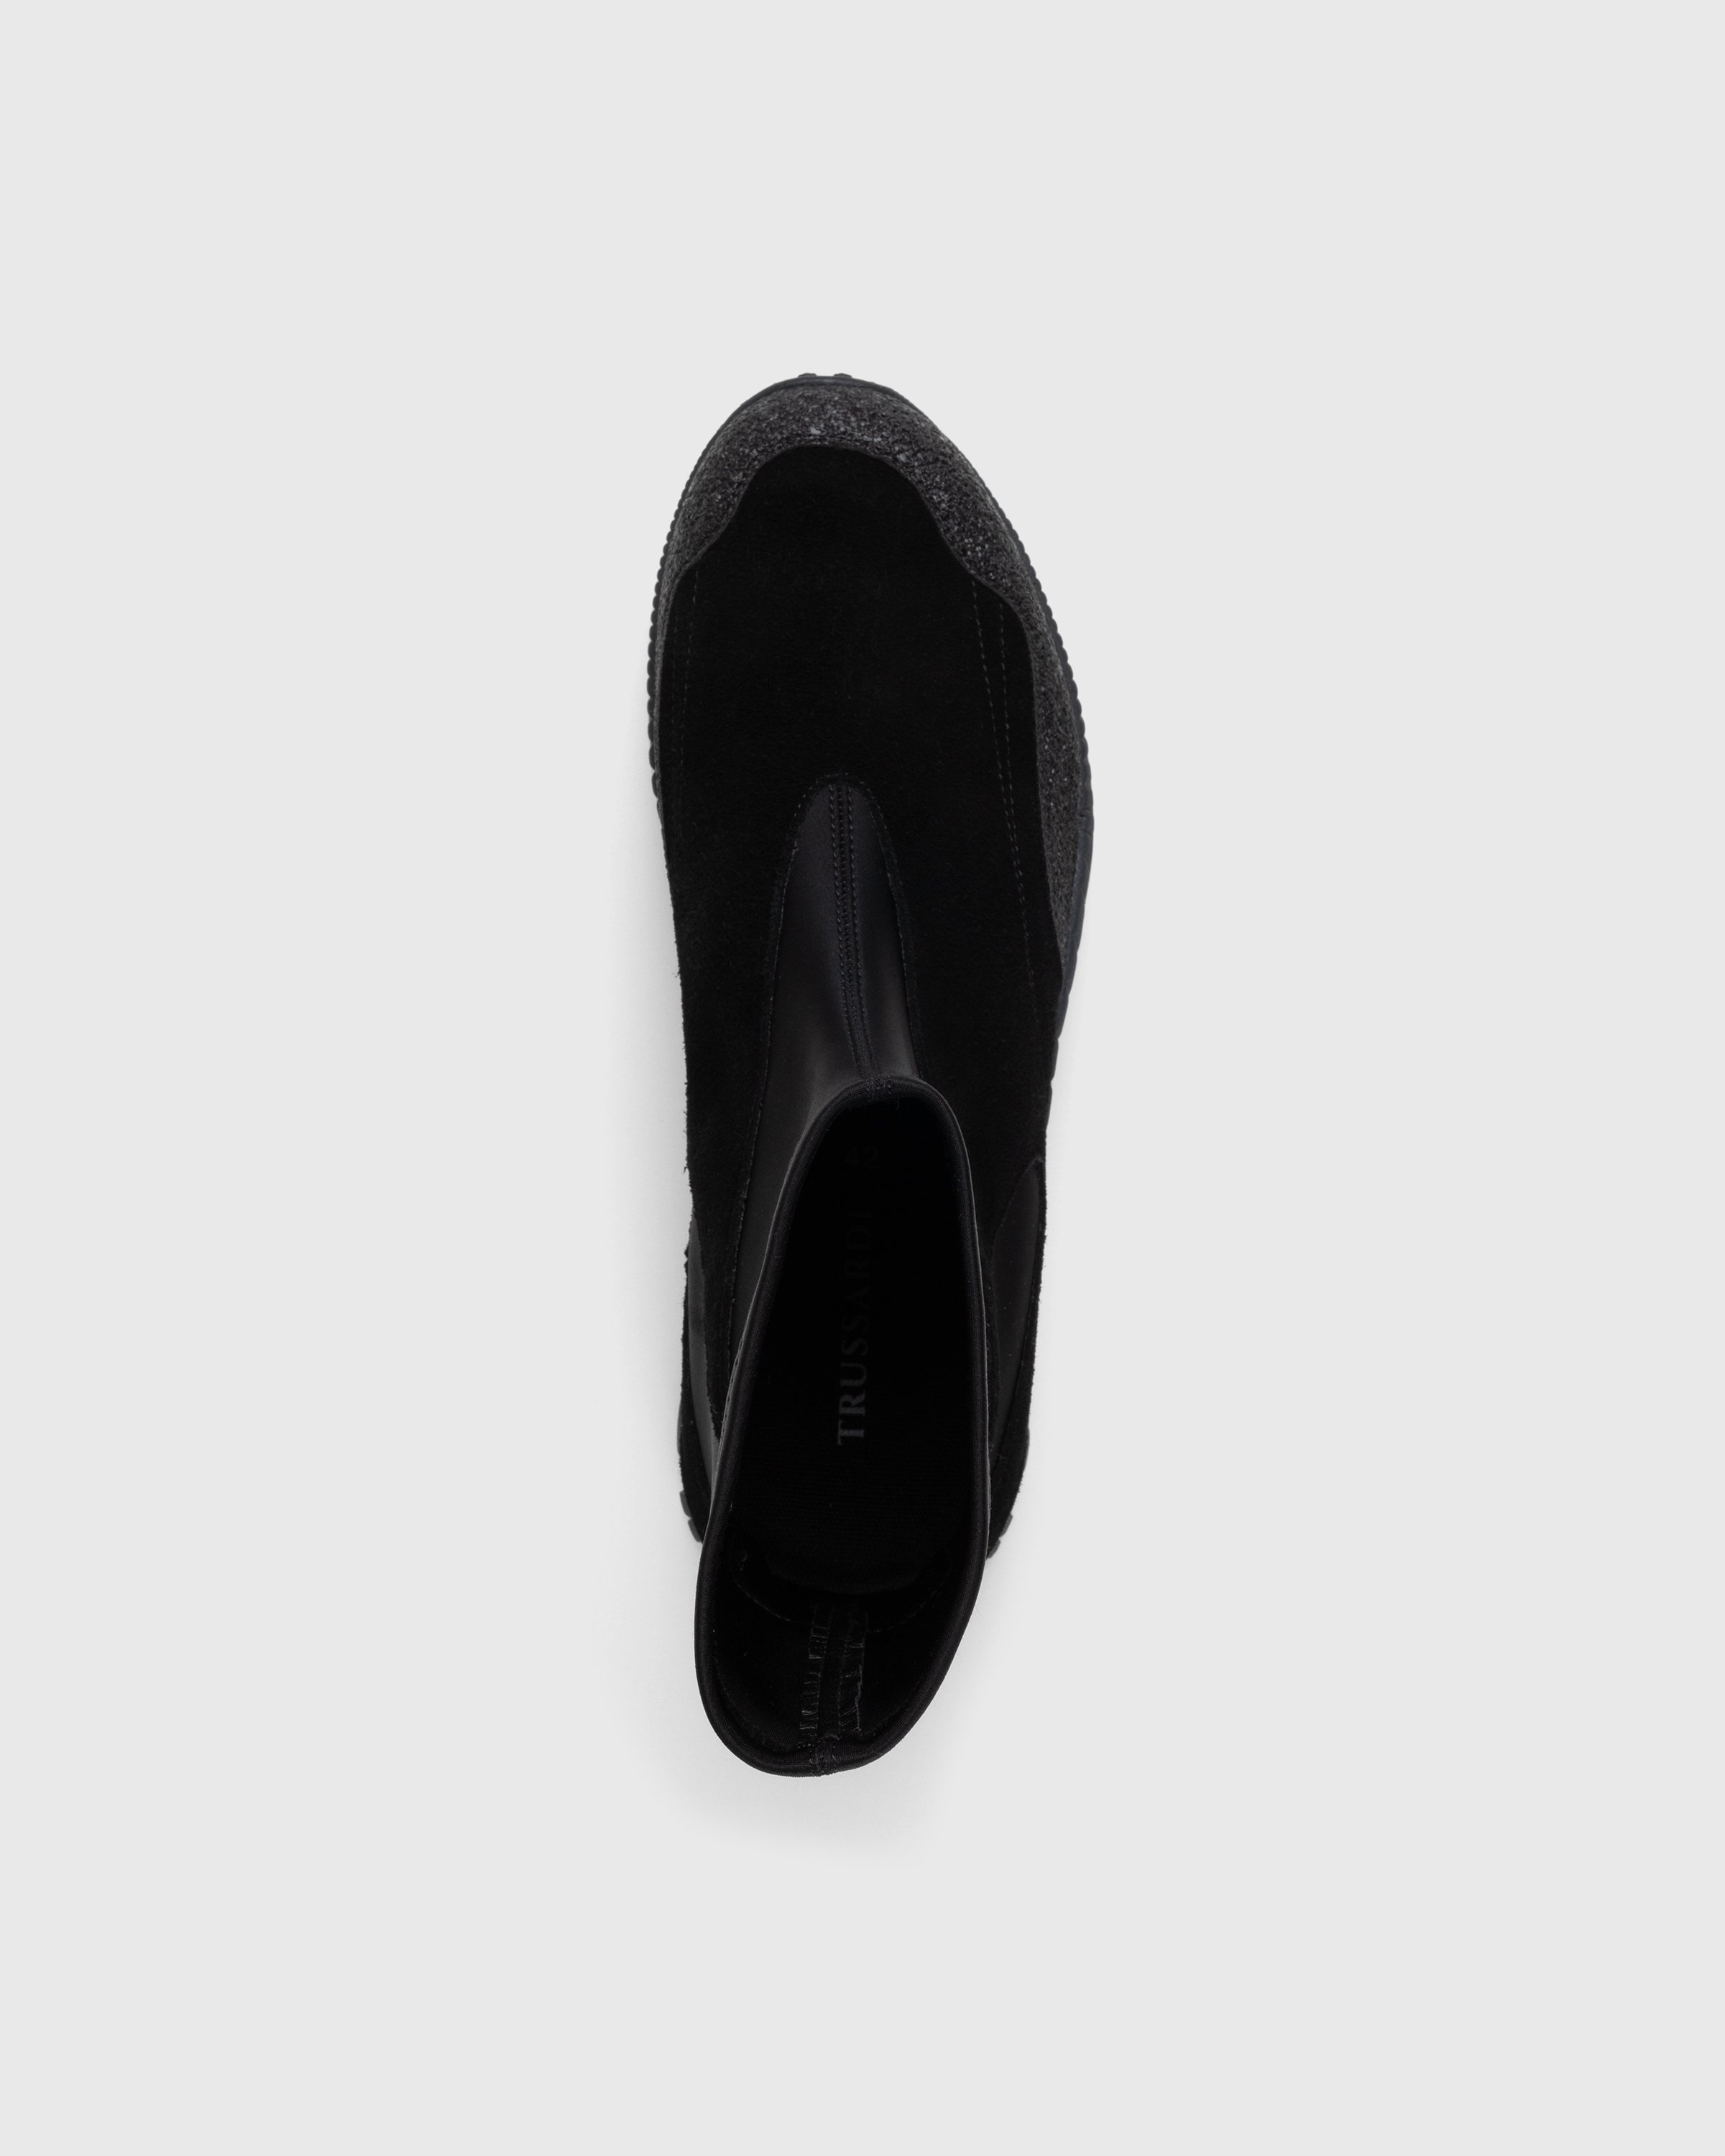 Trussardi – Neo Sock Sneaker Black - Low Top Sneakers - Black - Image 5